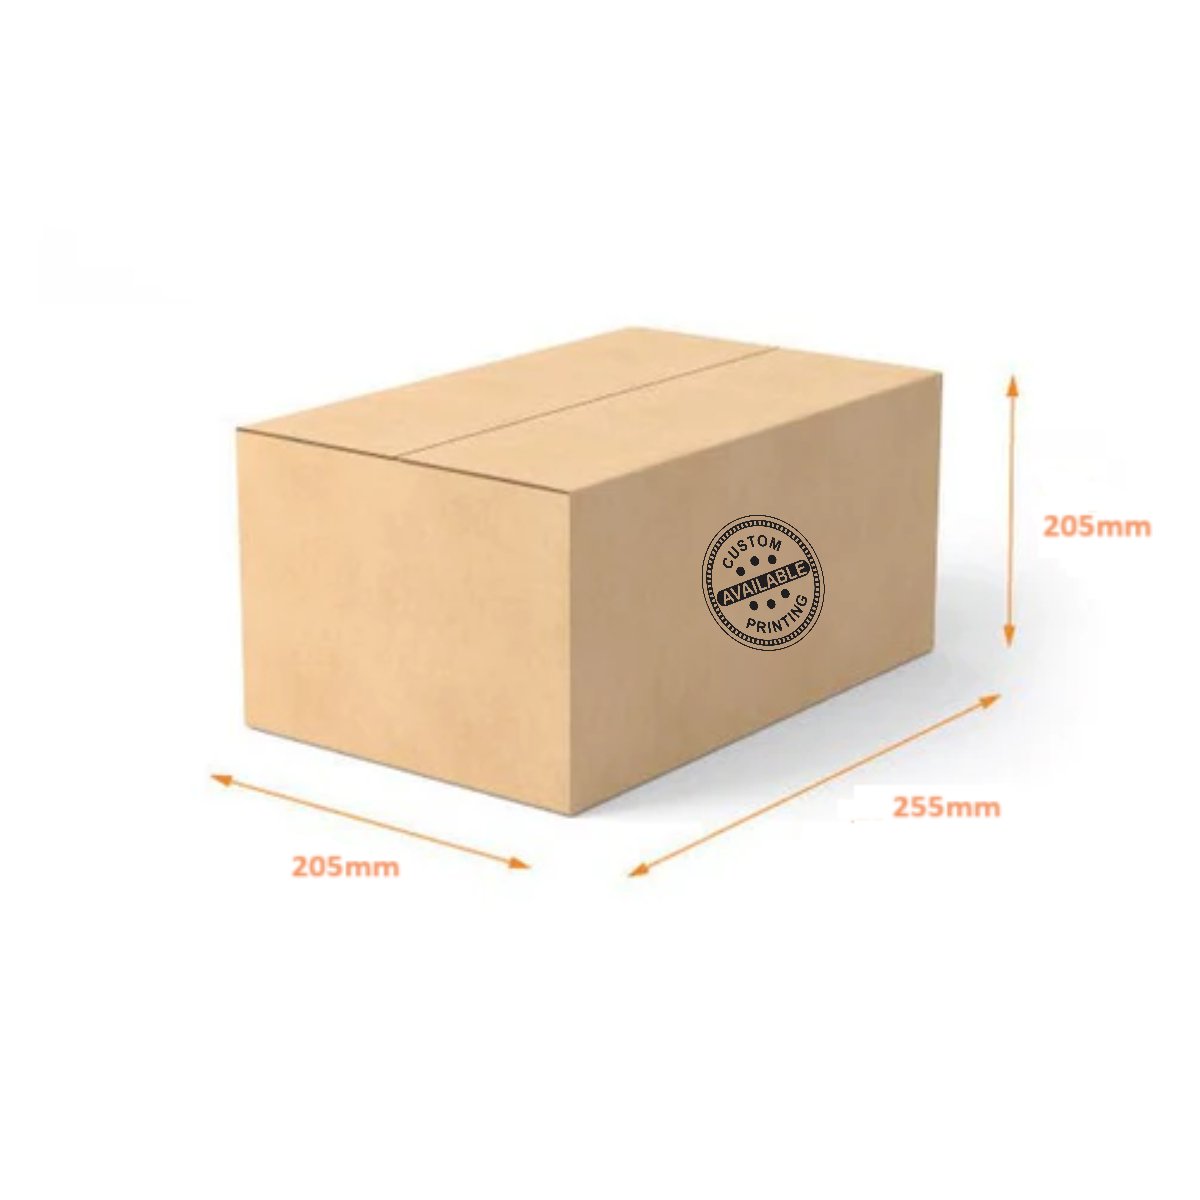 RSC Shipping Carton 339756 - 100% Recyclable - PackQueen